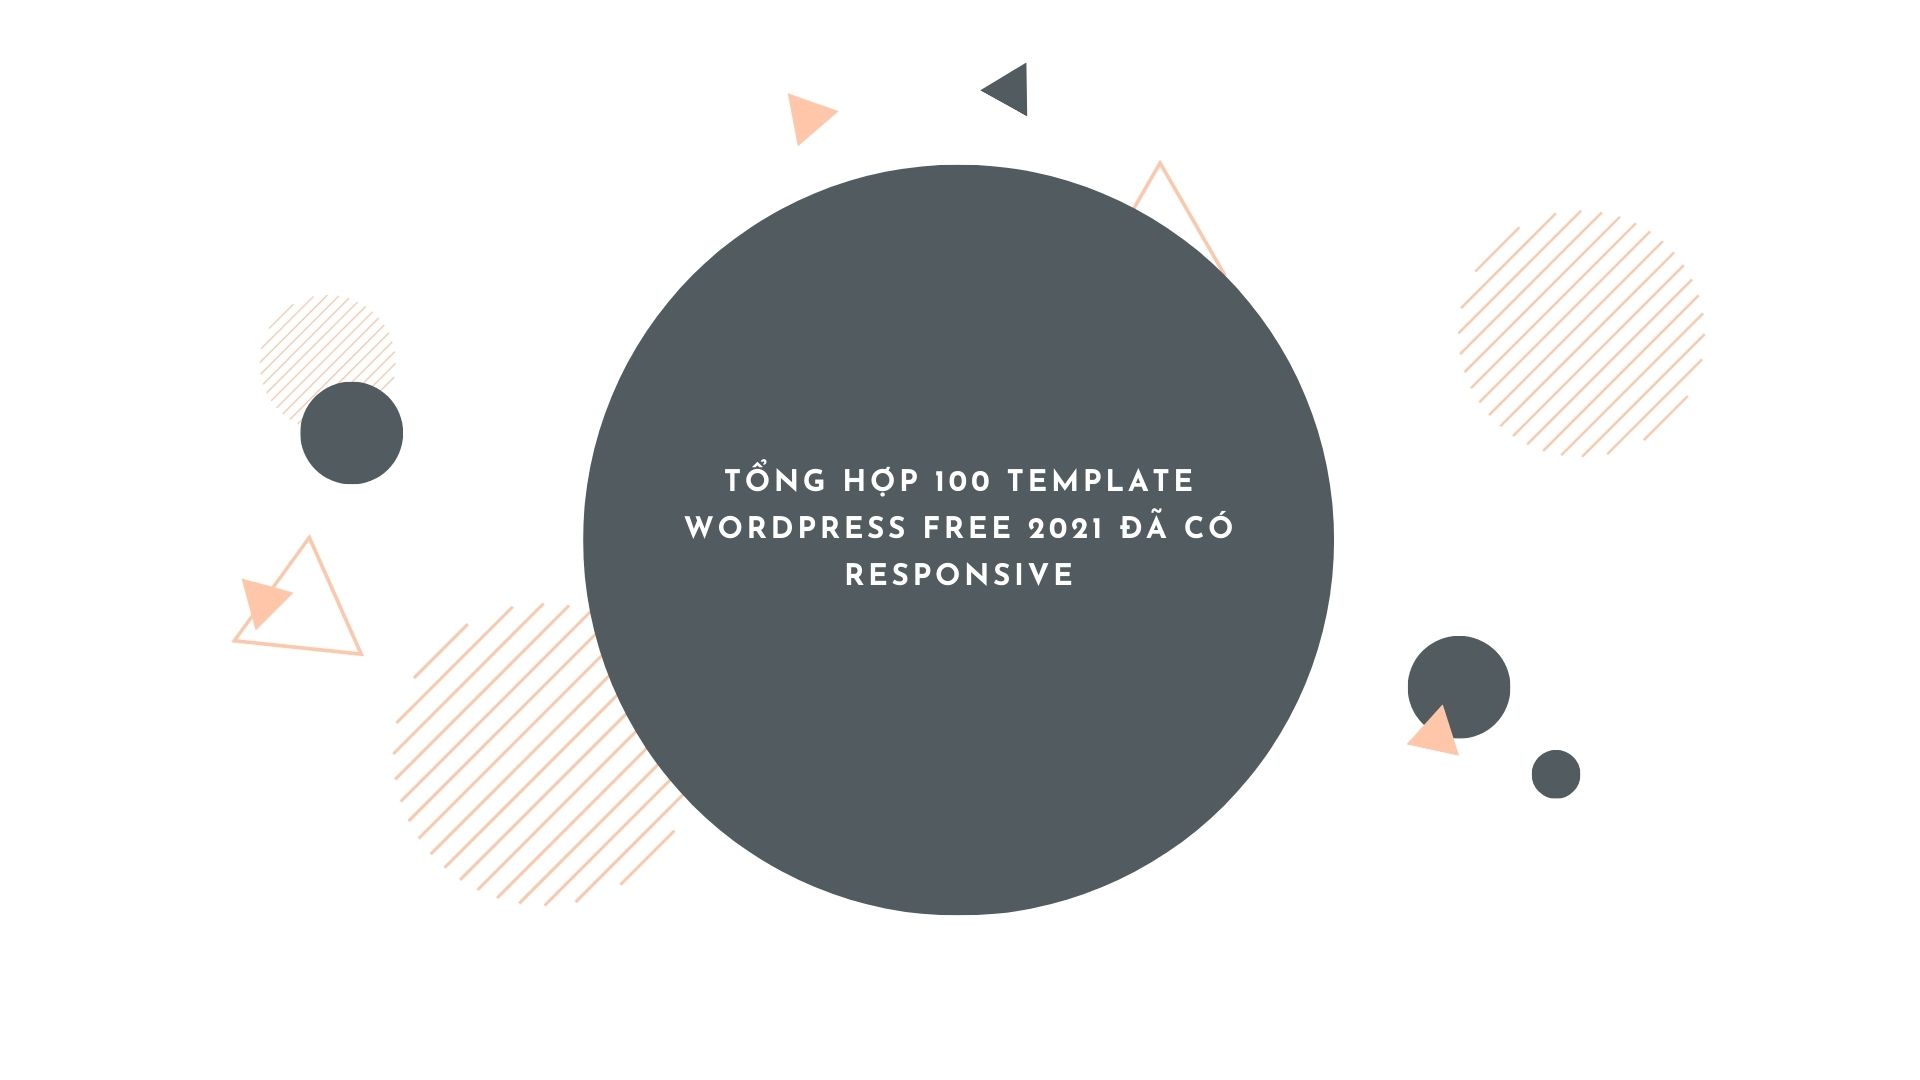 Tổng hợp 100 template wordpress free 2021 đã có responsive